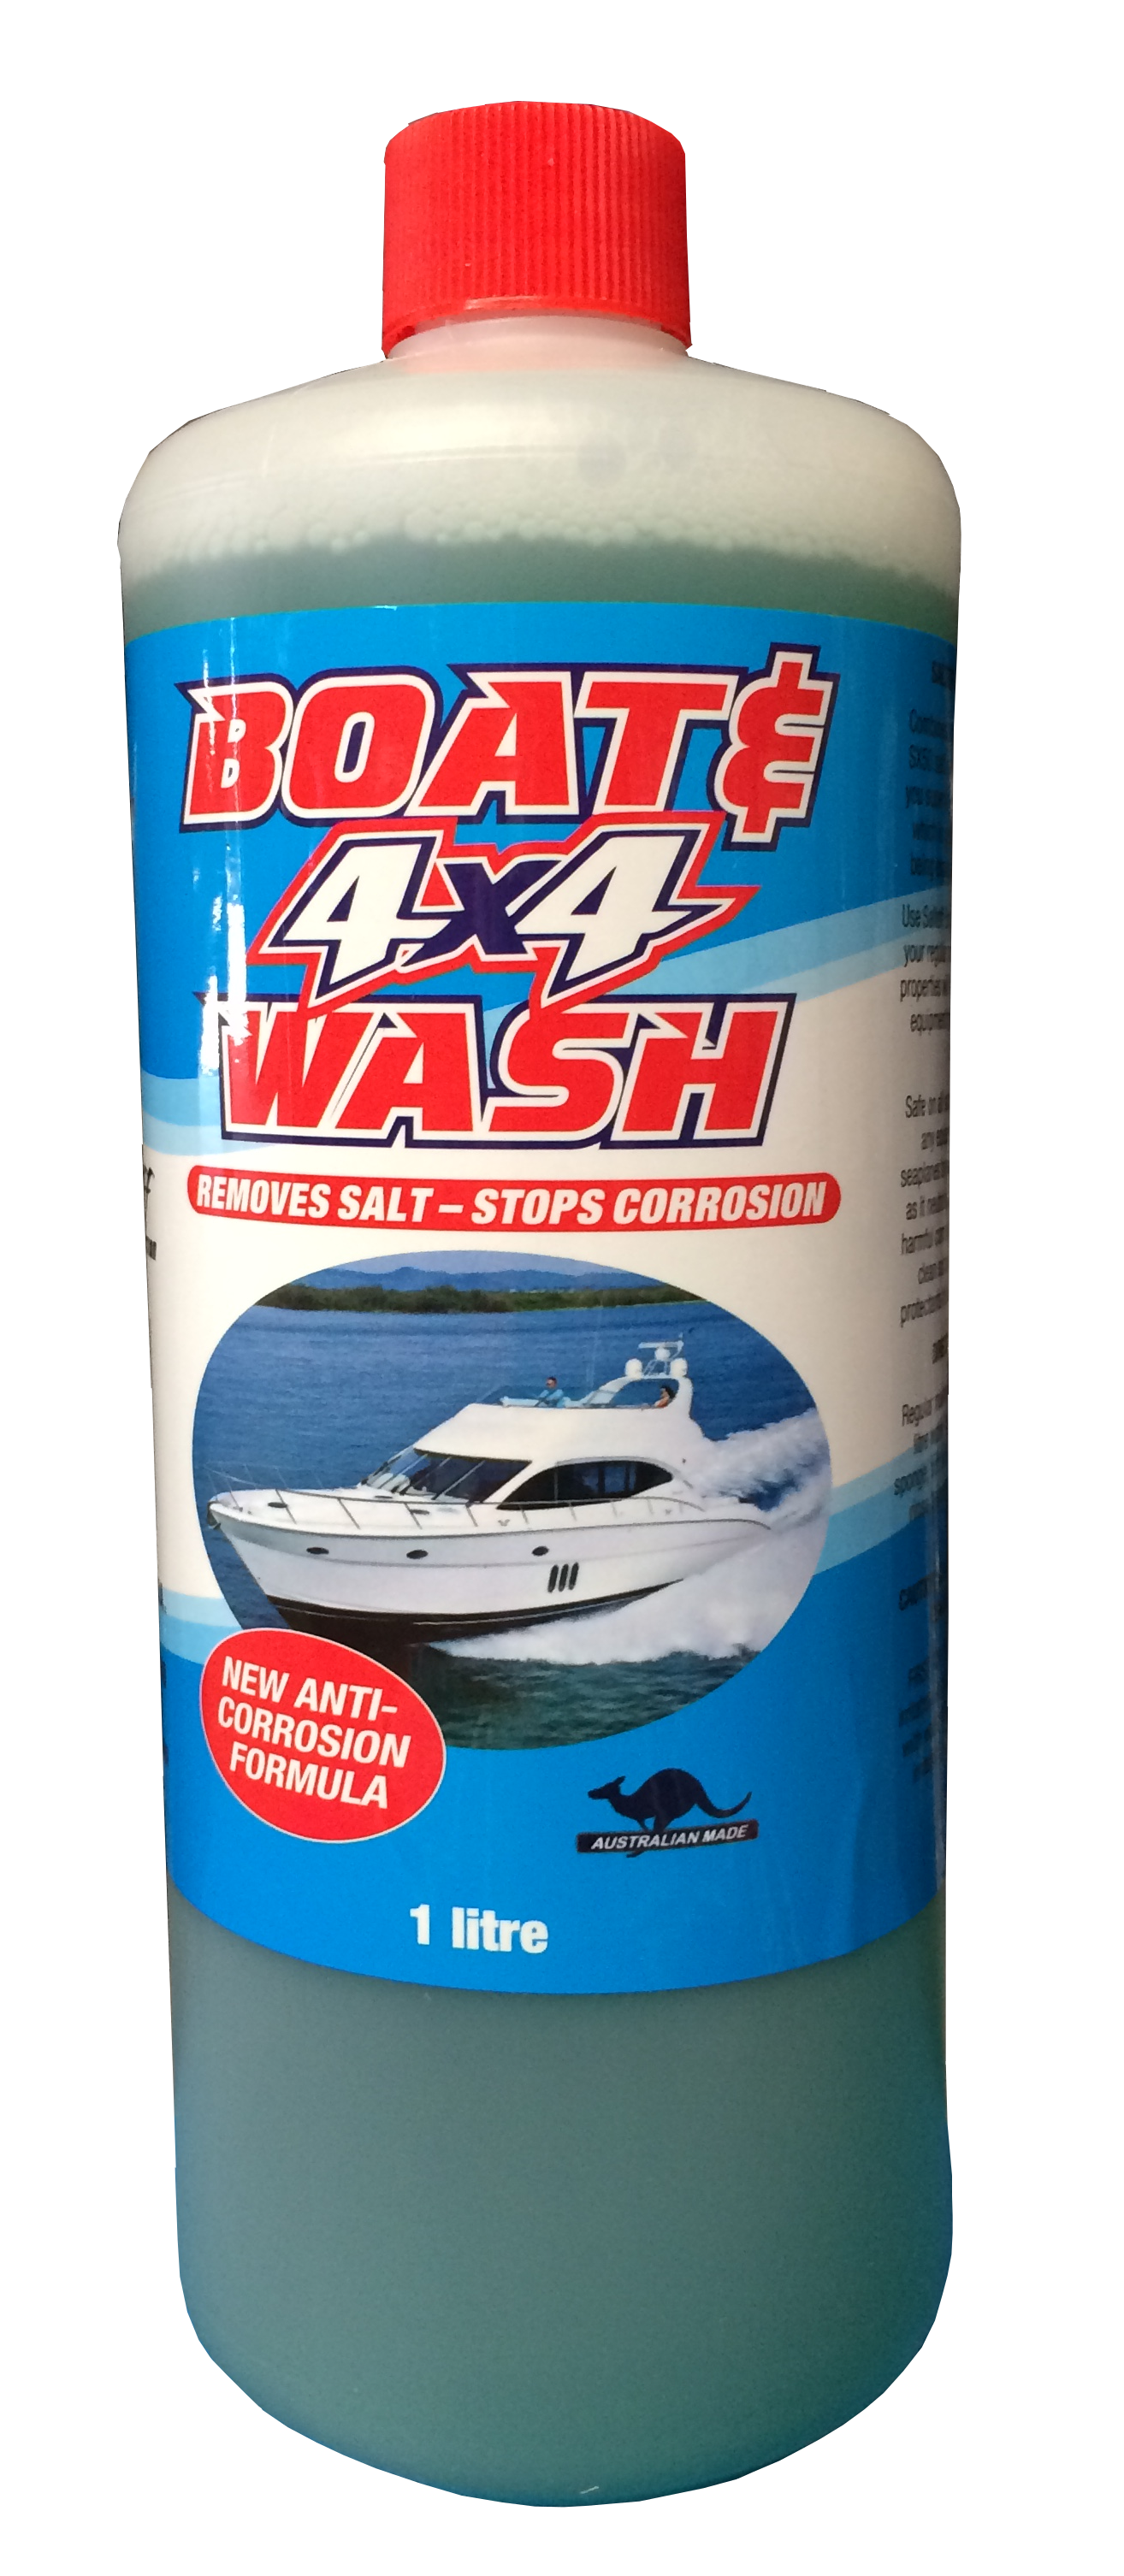 Boat Corrosion Wash